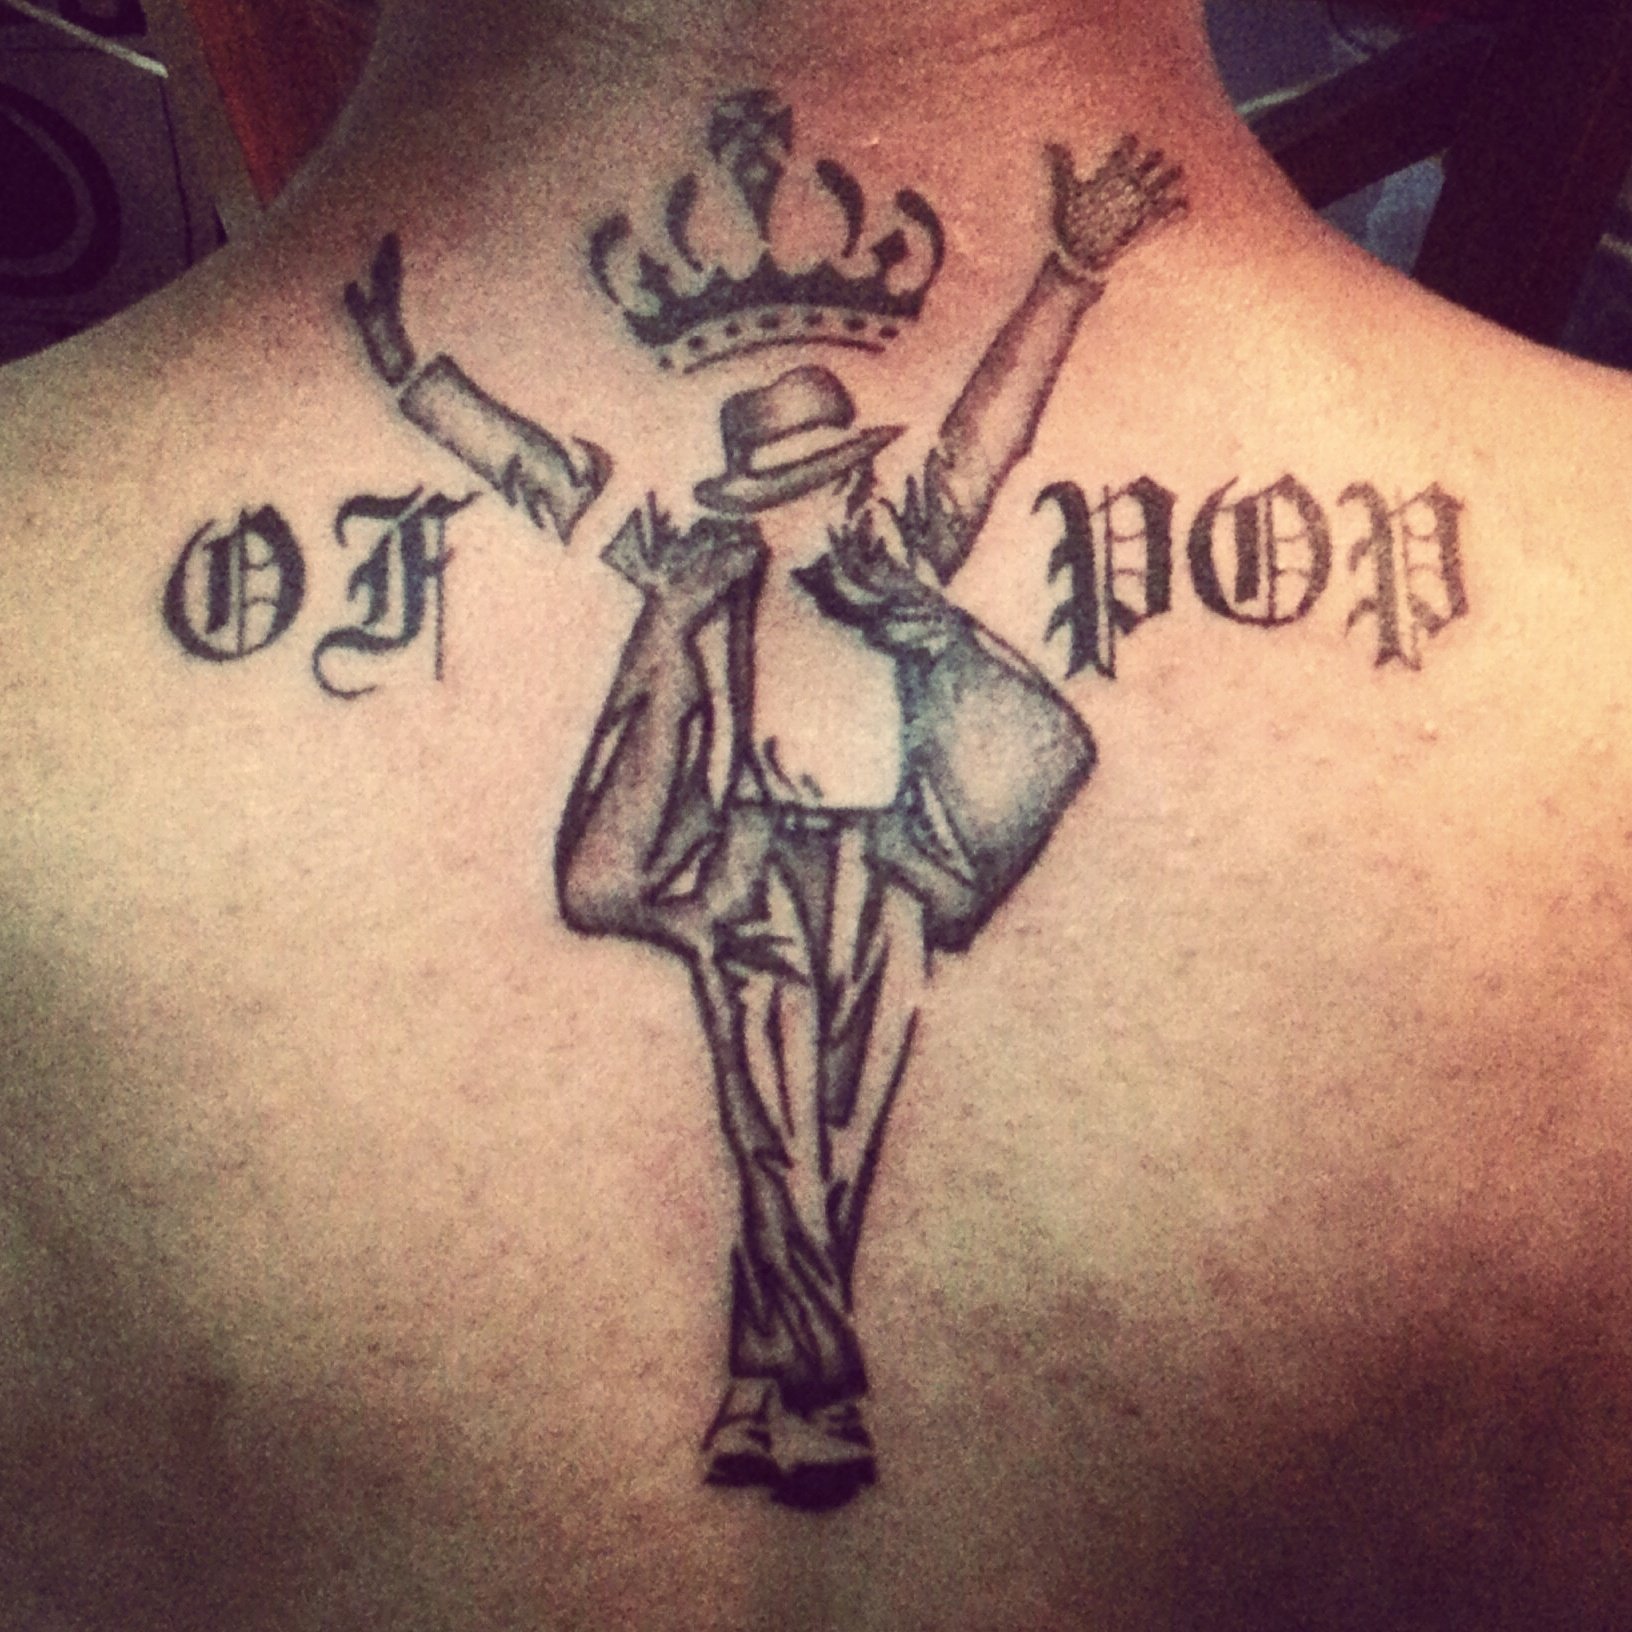 my mj tattoo by SupJake on DeviantArt